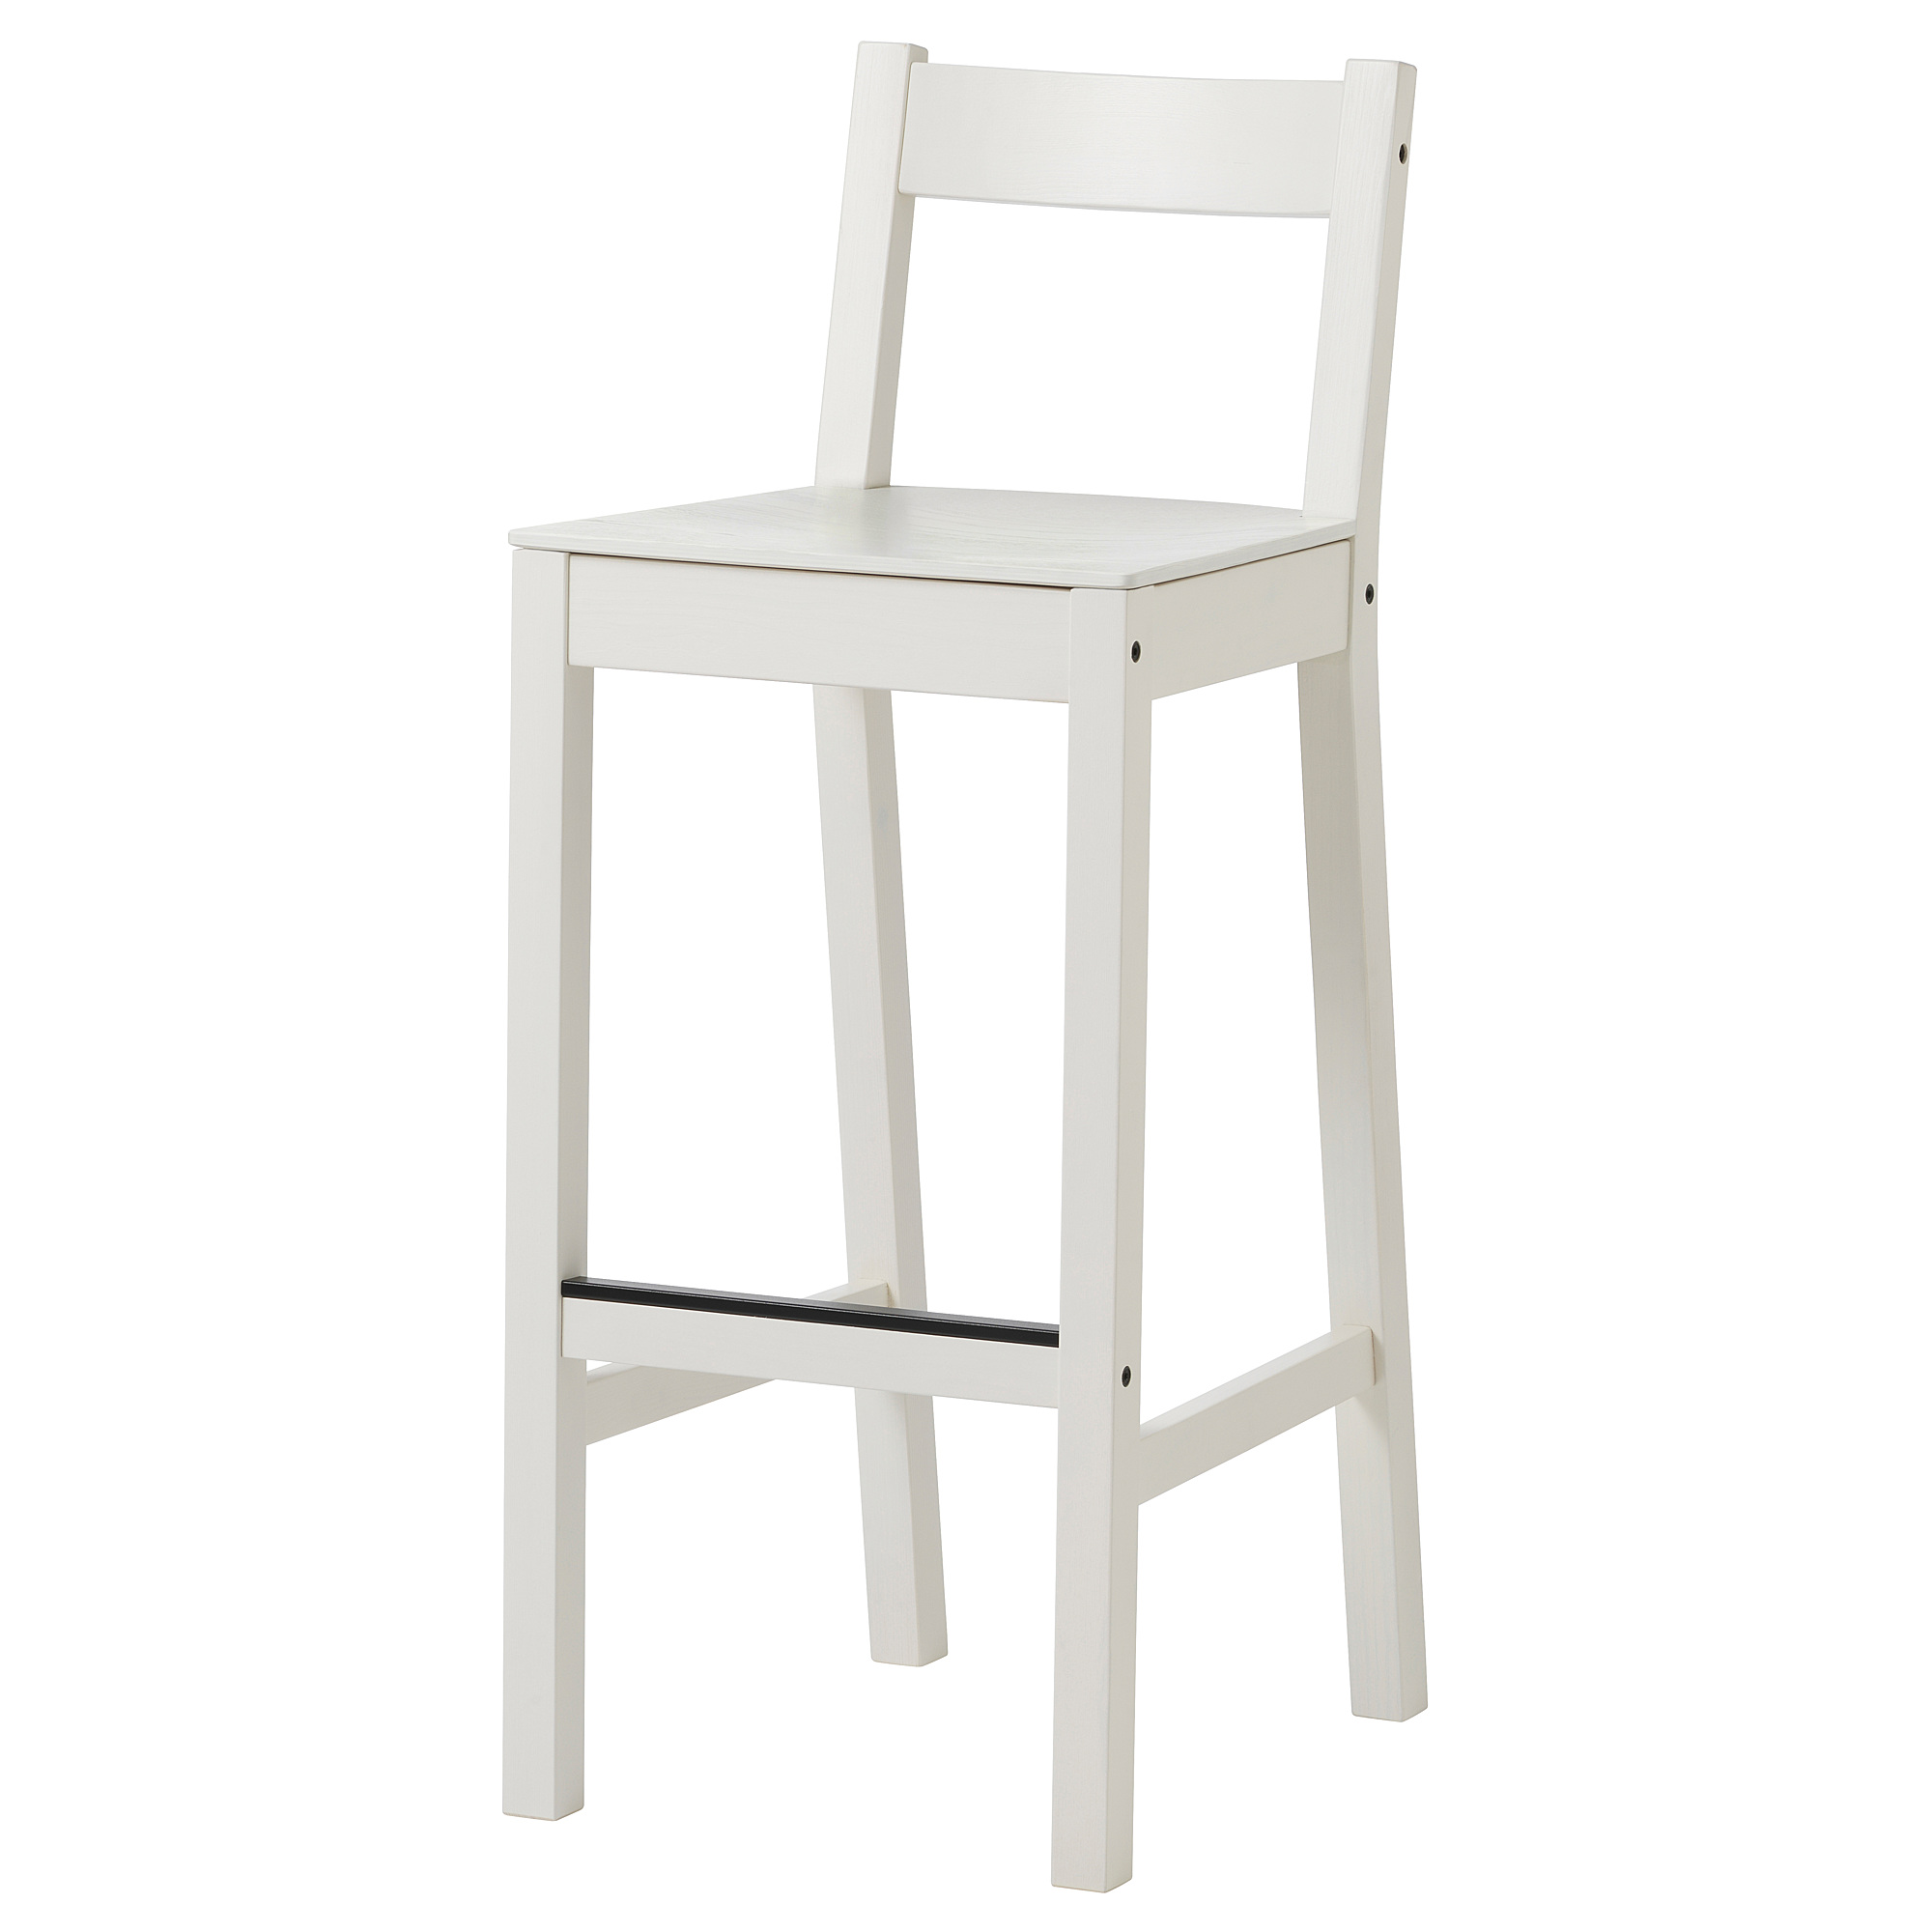 NORDVIKEN bar stool with backrest